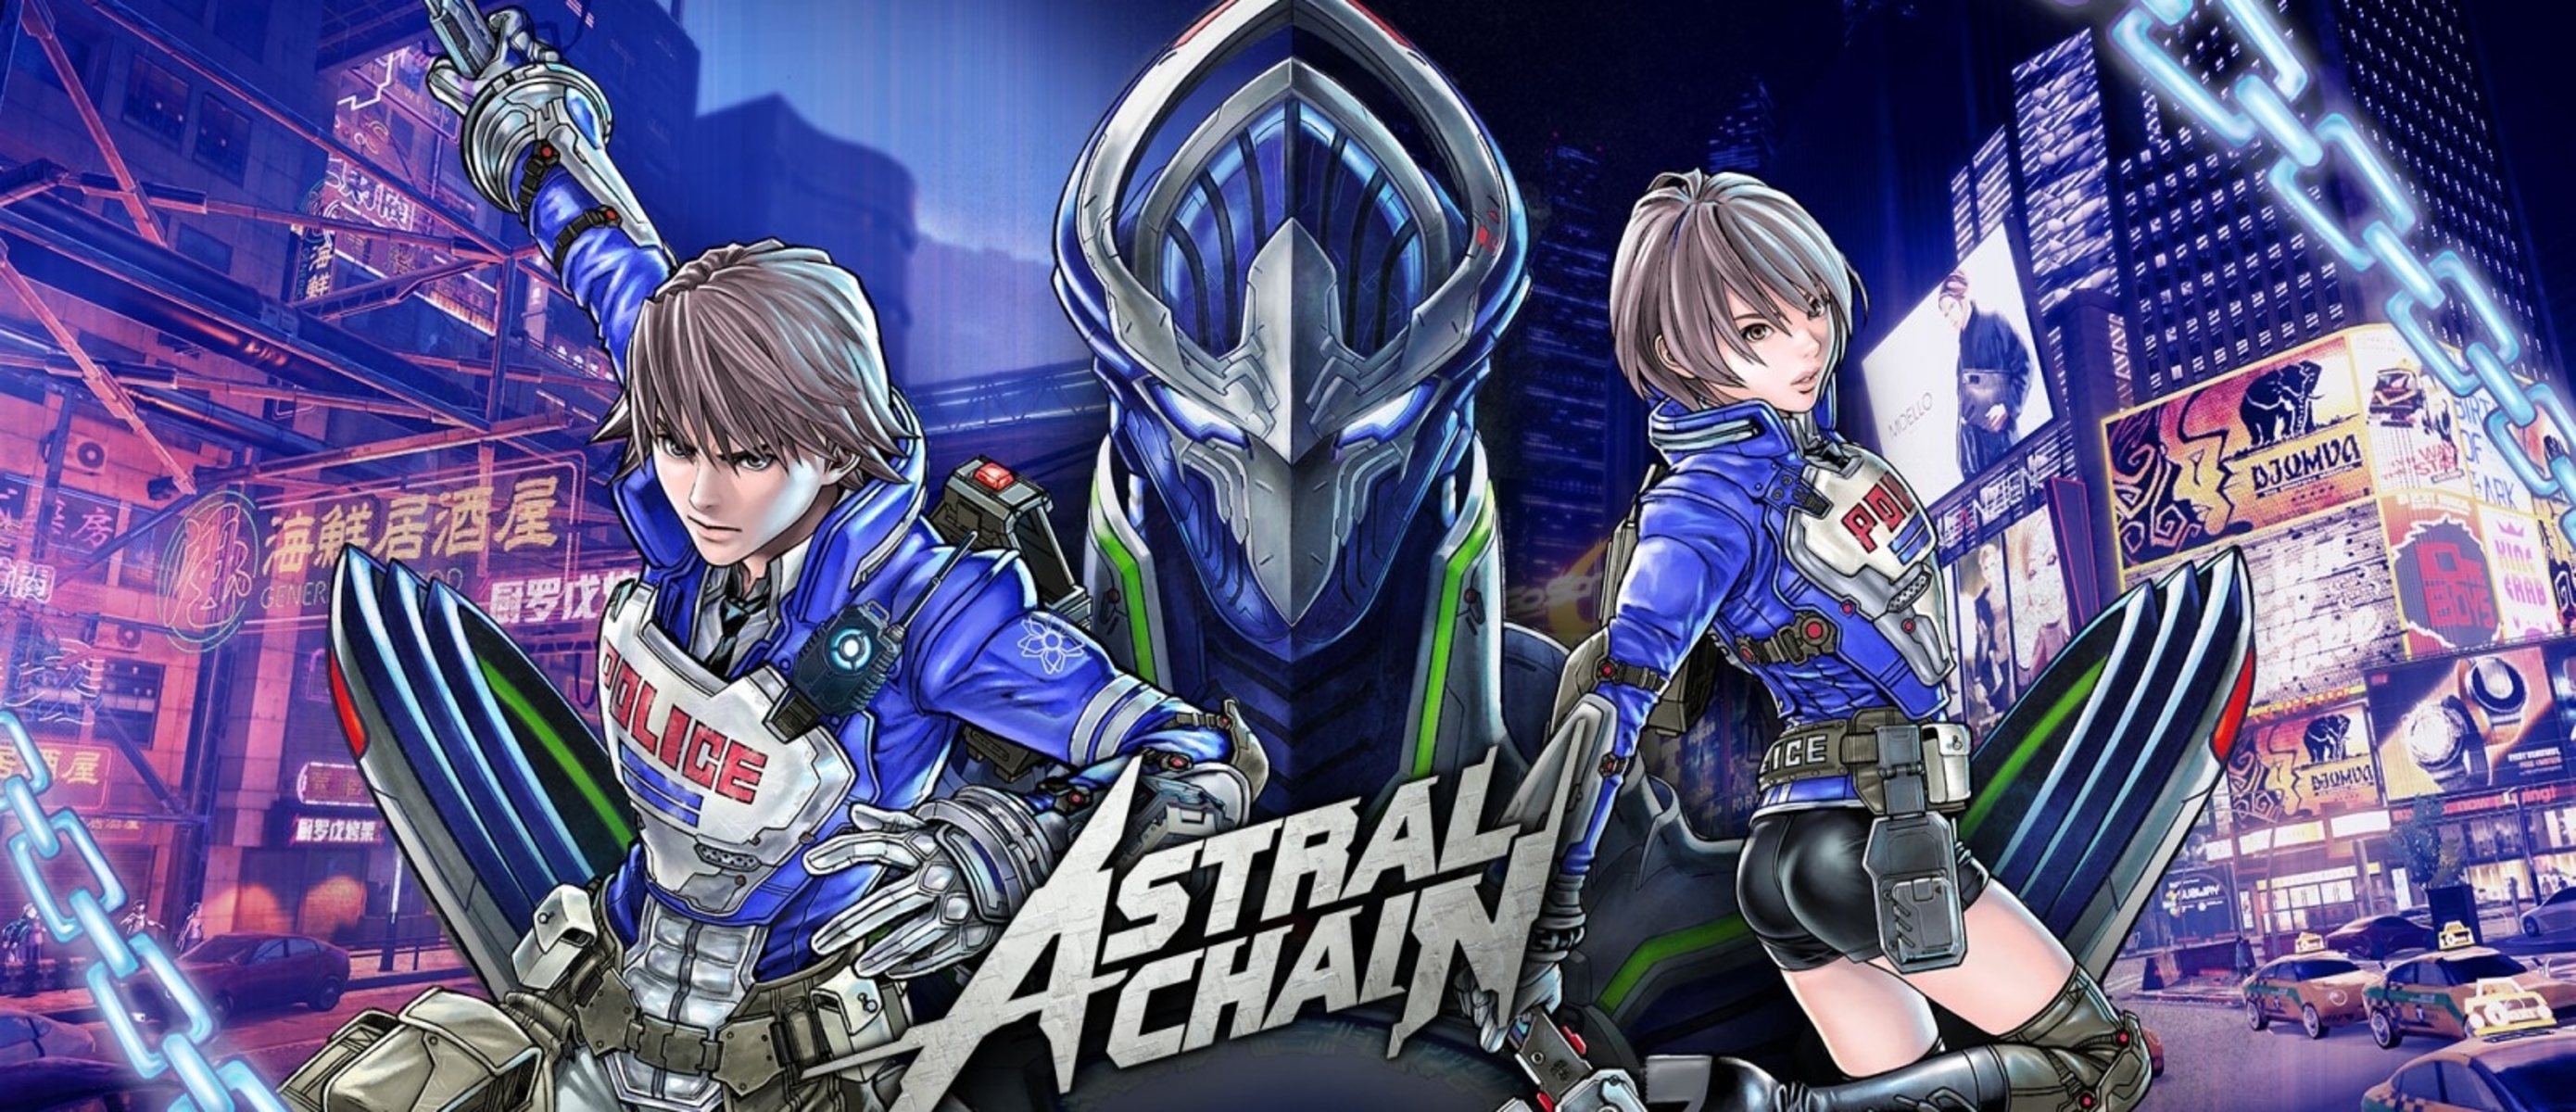 Astral chain nintendo. Astral Chain Nintendo Switch. Platinum games. Astral source. Ai Art.